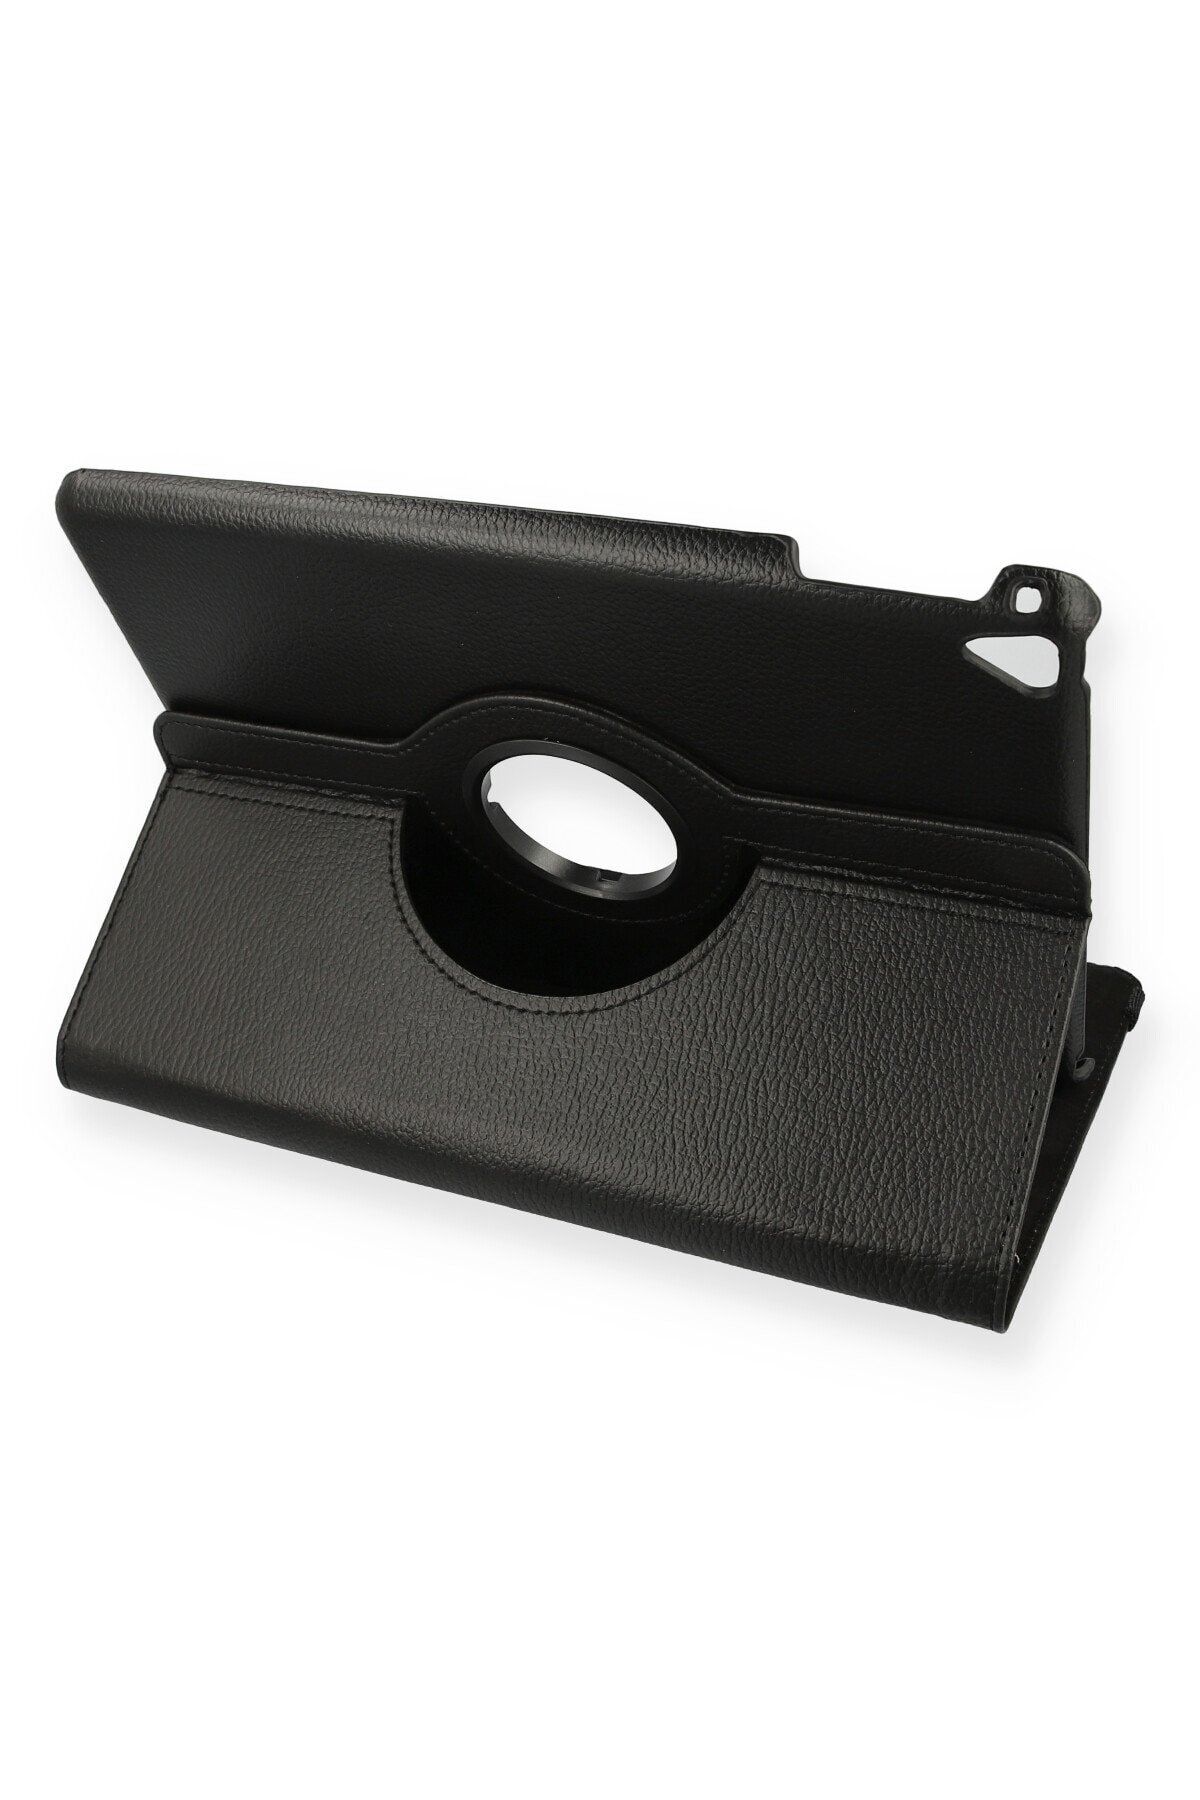 Bilişim Aksesuar Ipad Air 2 9.7 Kılıf 360 Tablet Deri Kılıf - Siyah